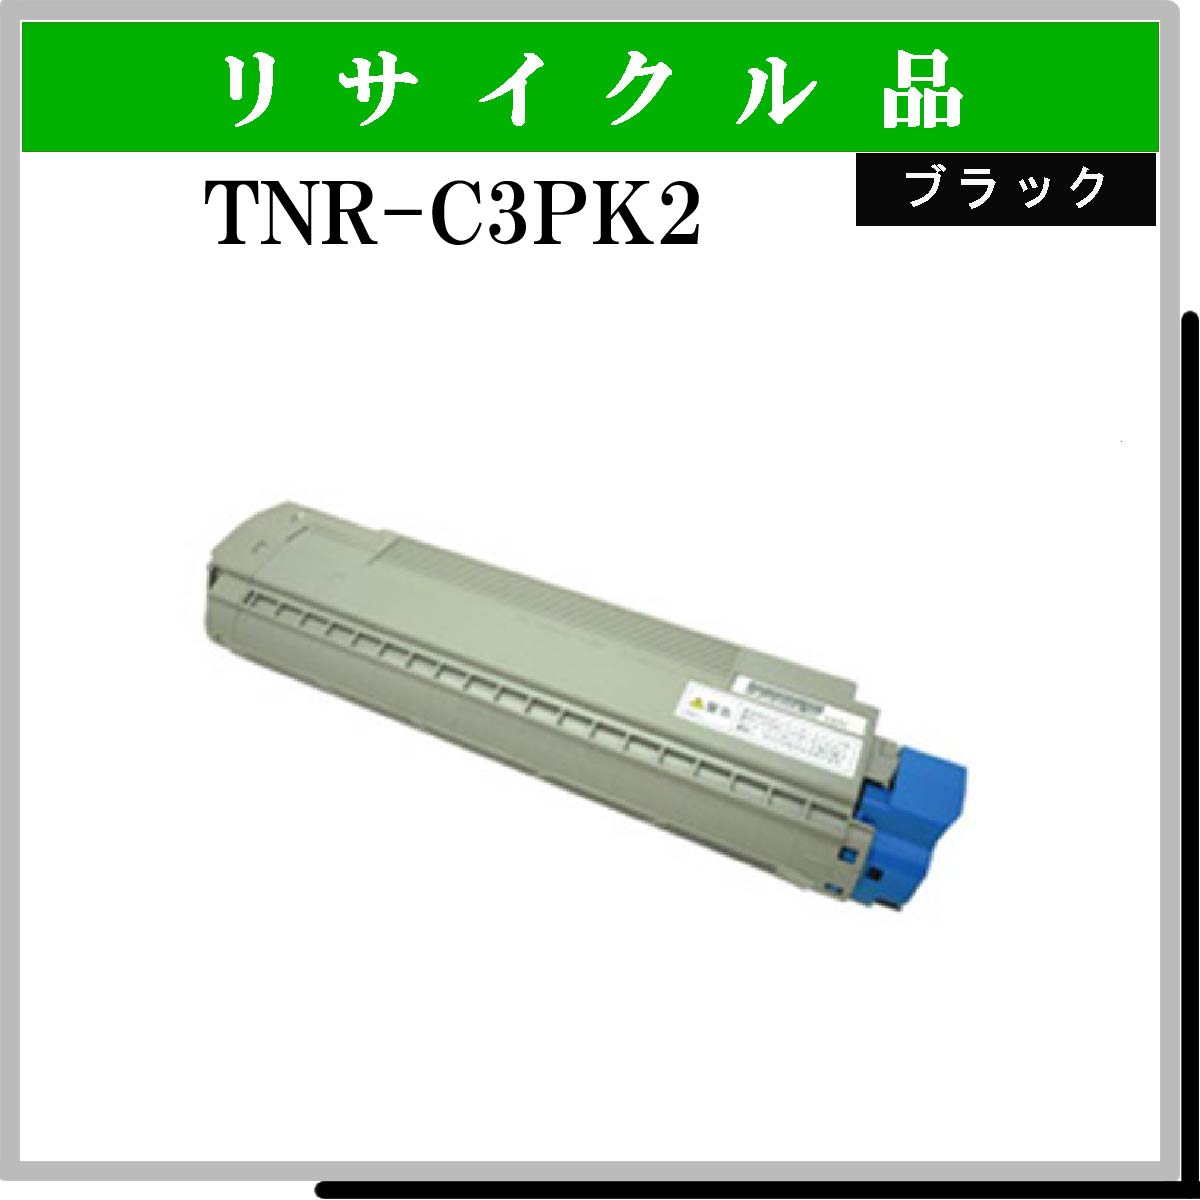 TNR-C3PK2